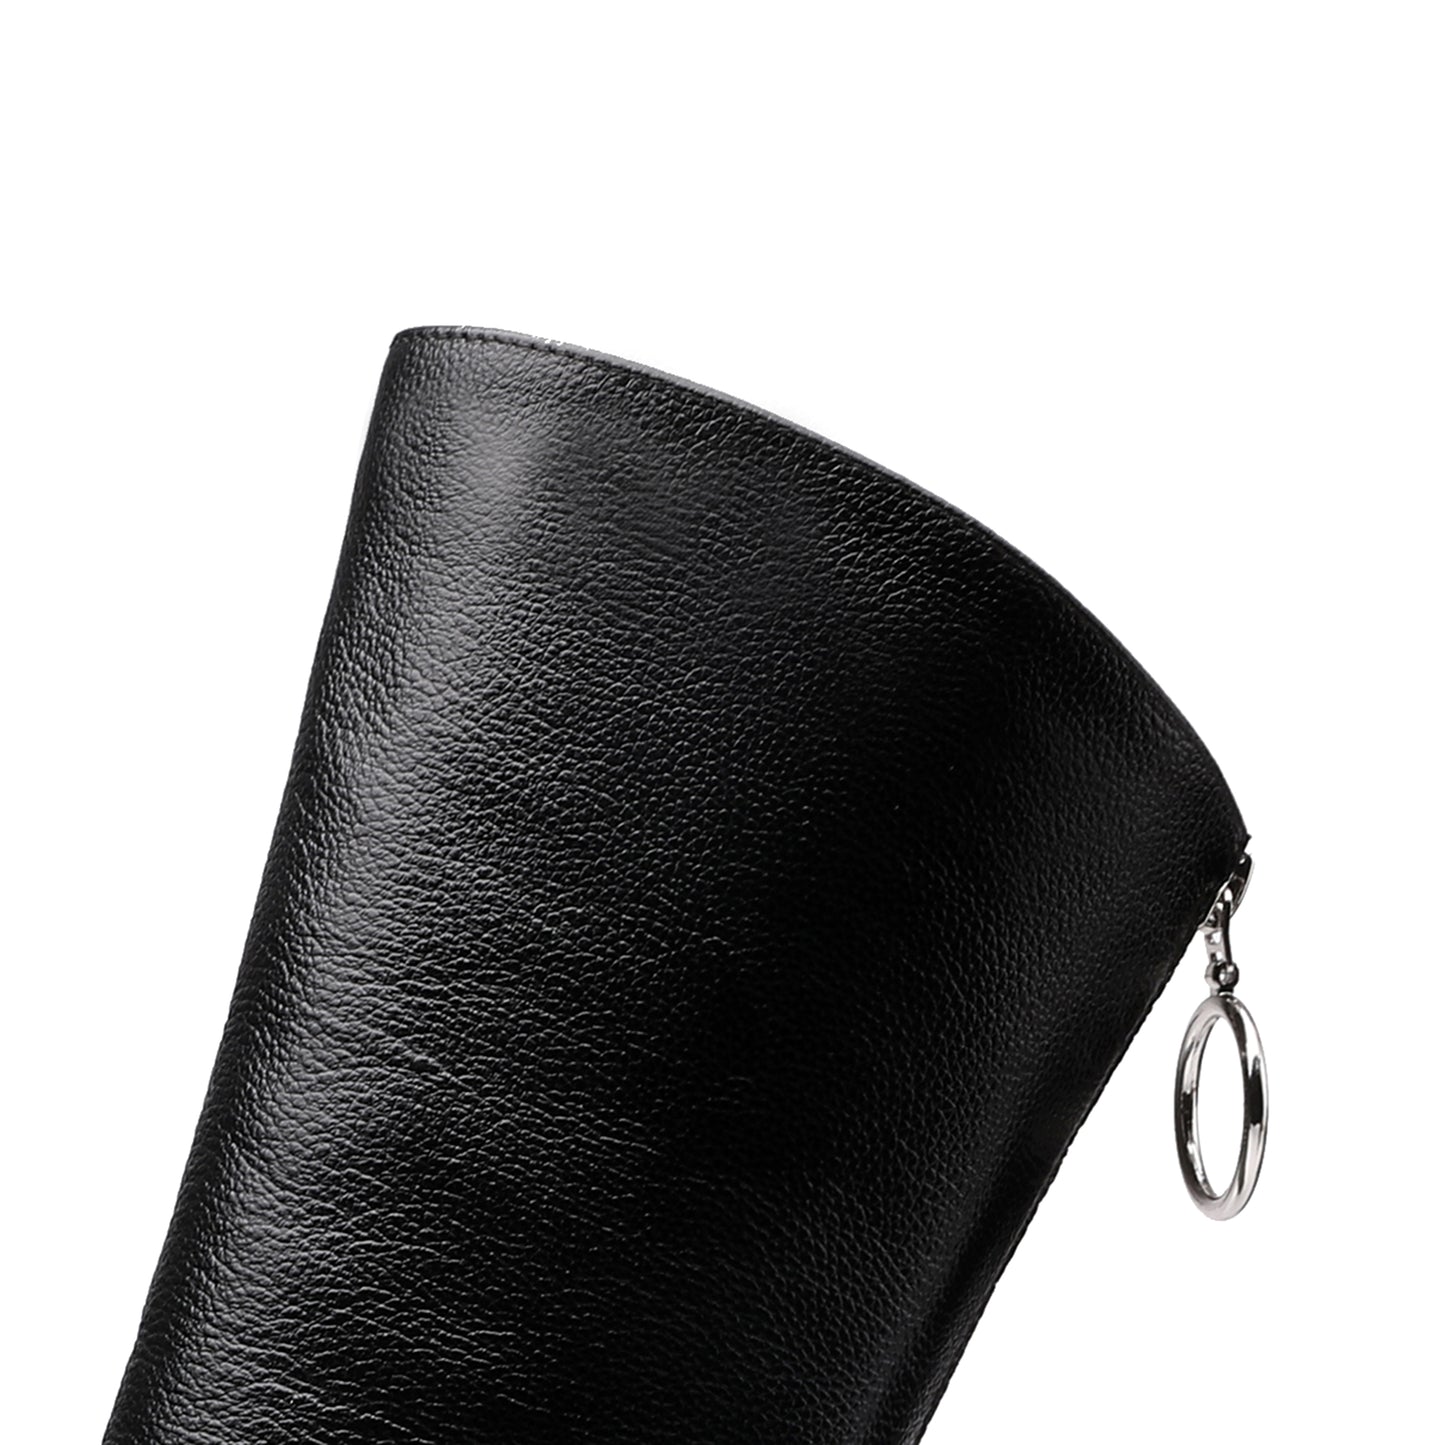 TinaCus Women's Handmade Genuine Leather Pointed Toe Gradient Color Mid Block Heel Back Zip Up Trendy Ruffle Mid-Calf Boots